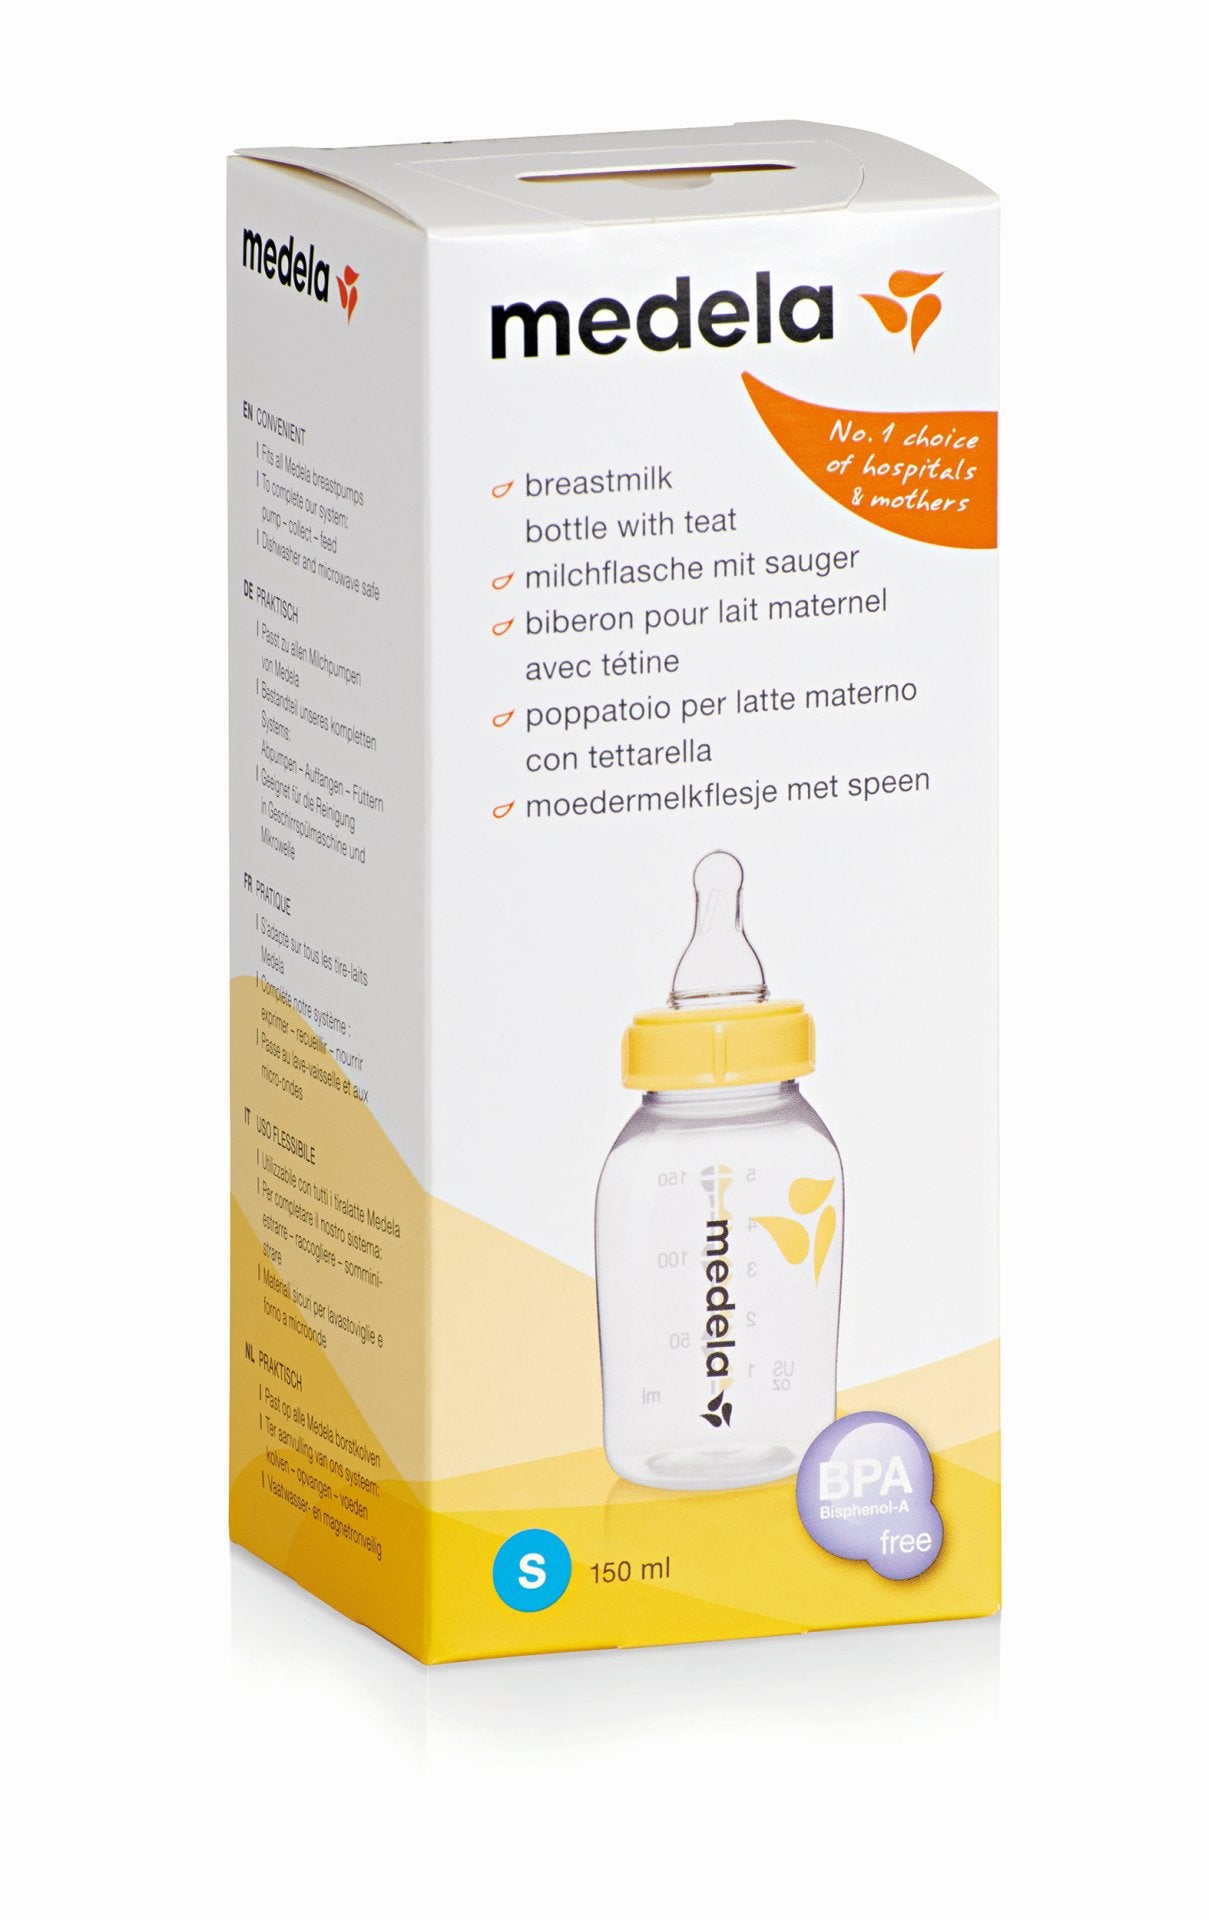 Medela Calma Bottle Nipple | Baby Bottle Teat for use with Medela  collection bottles | Made without BPA | Air-Vent System